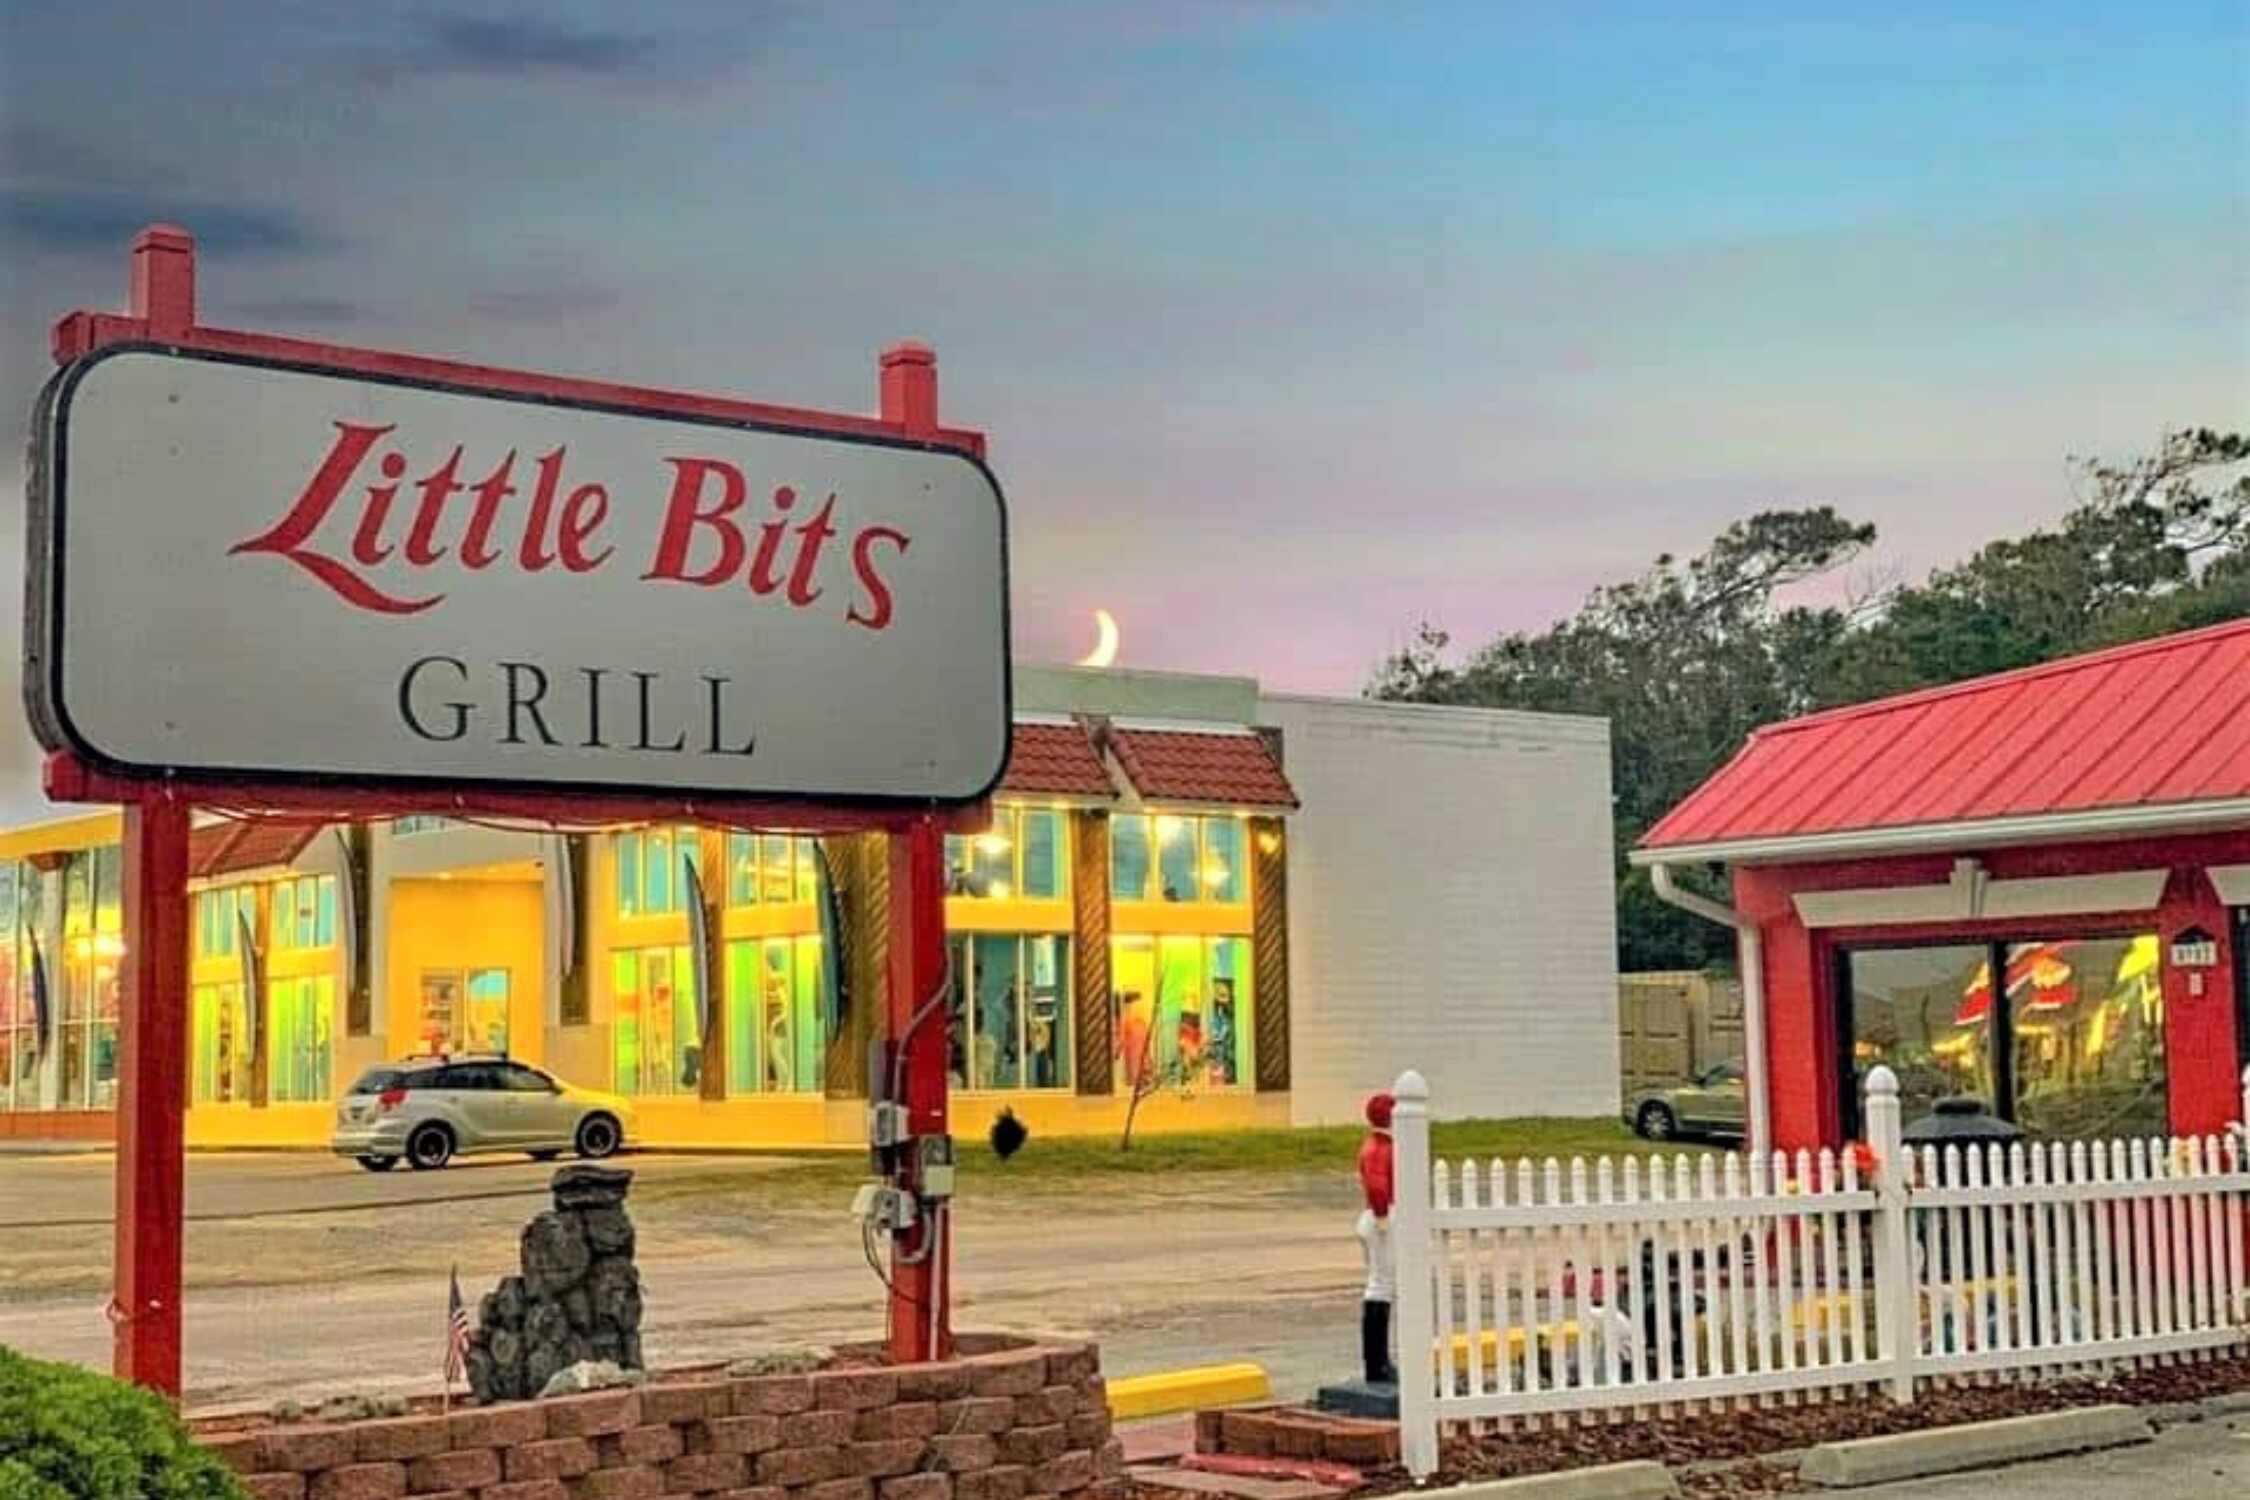 Little Bit’s Grill